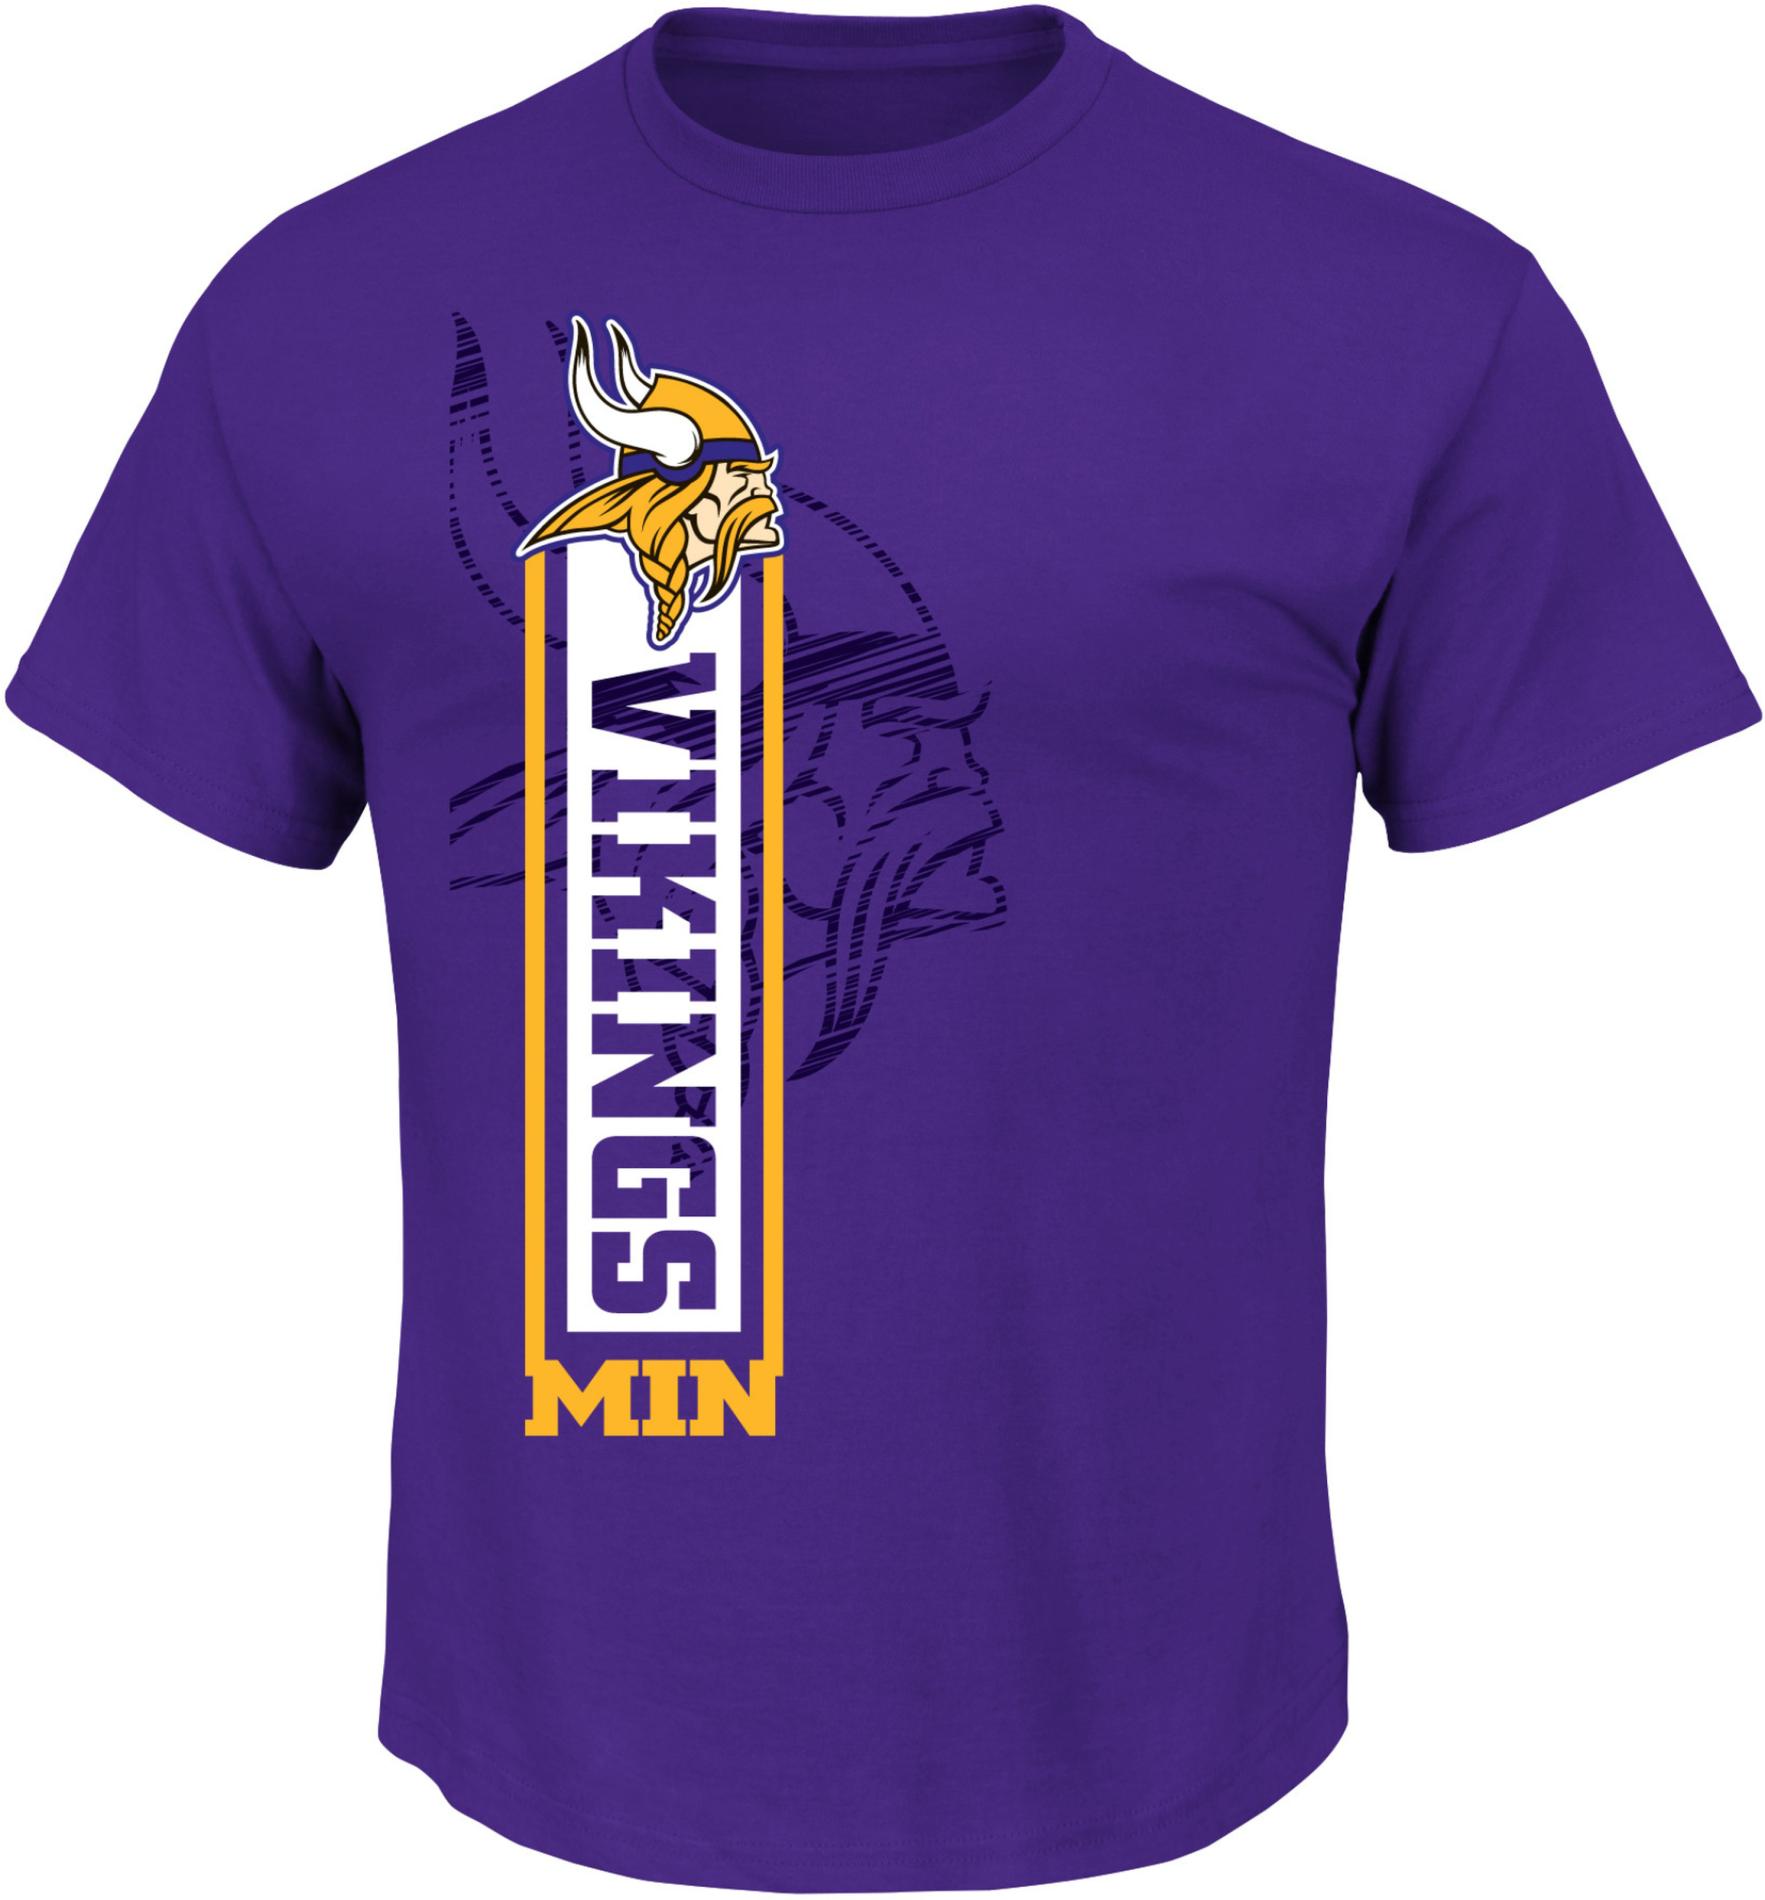 NFL Men's Short-Sleeve T-Shirt - Minnesota Vikings